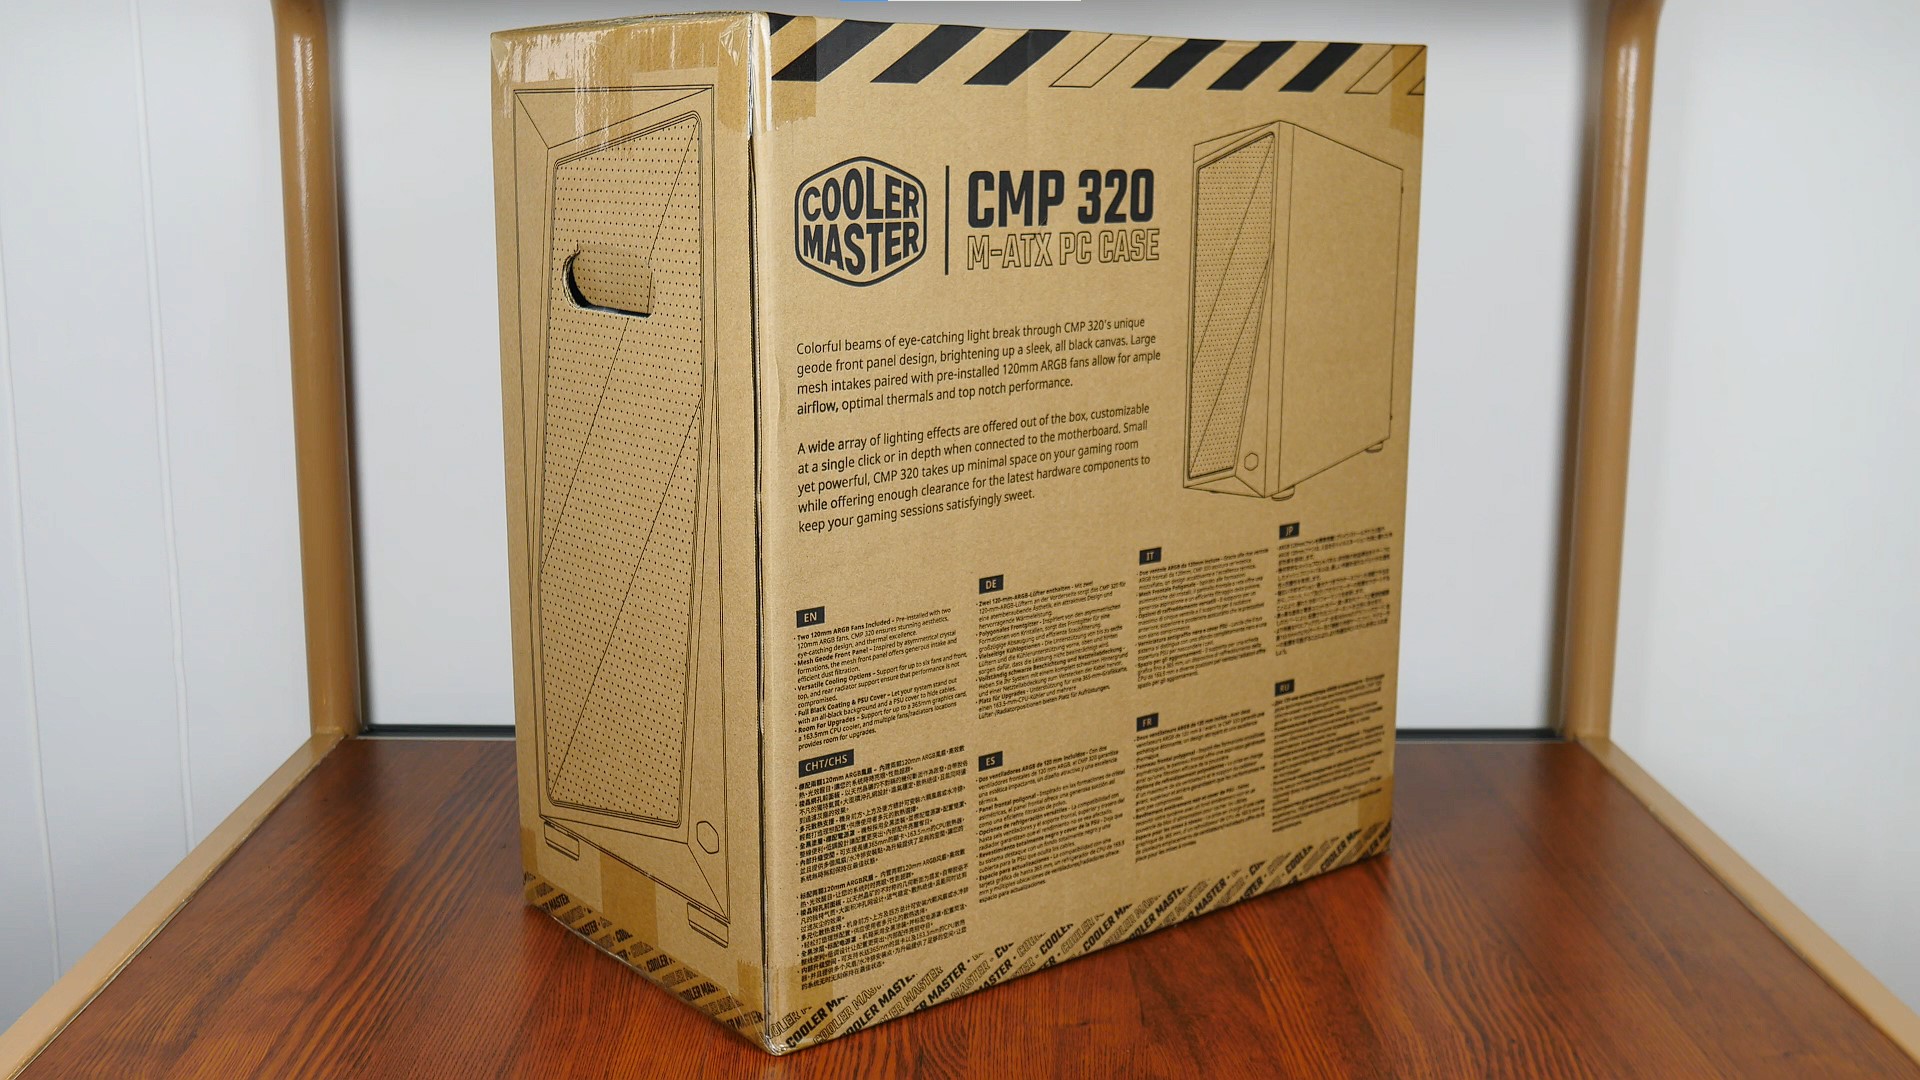 Cooler Master CMP 320 Packaging (Rear)